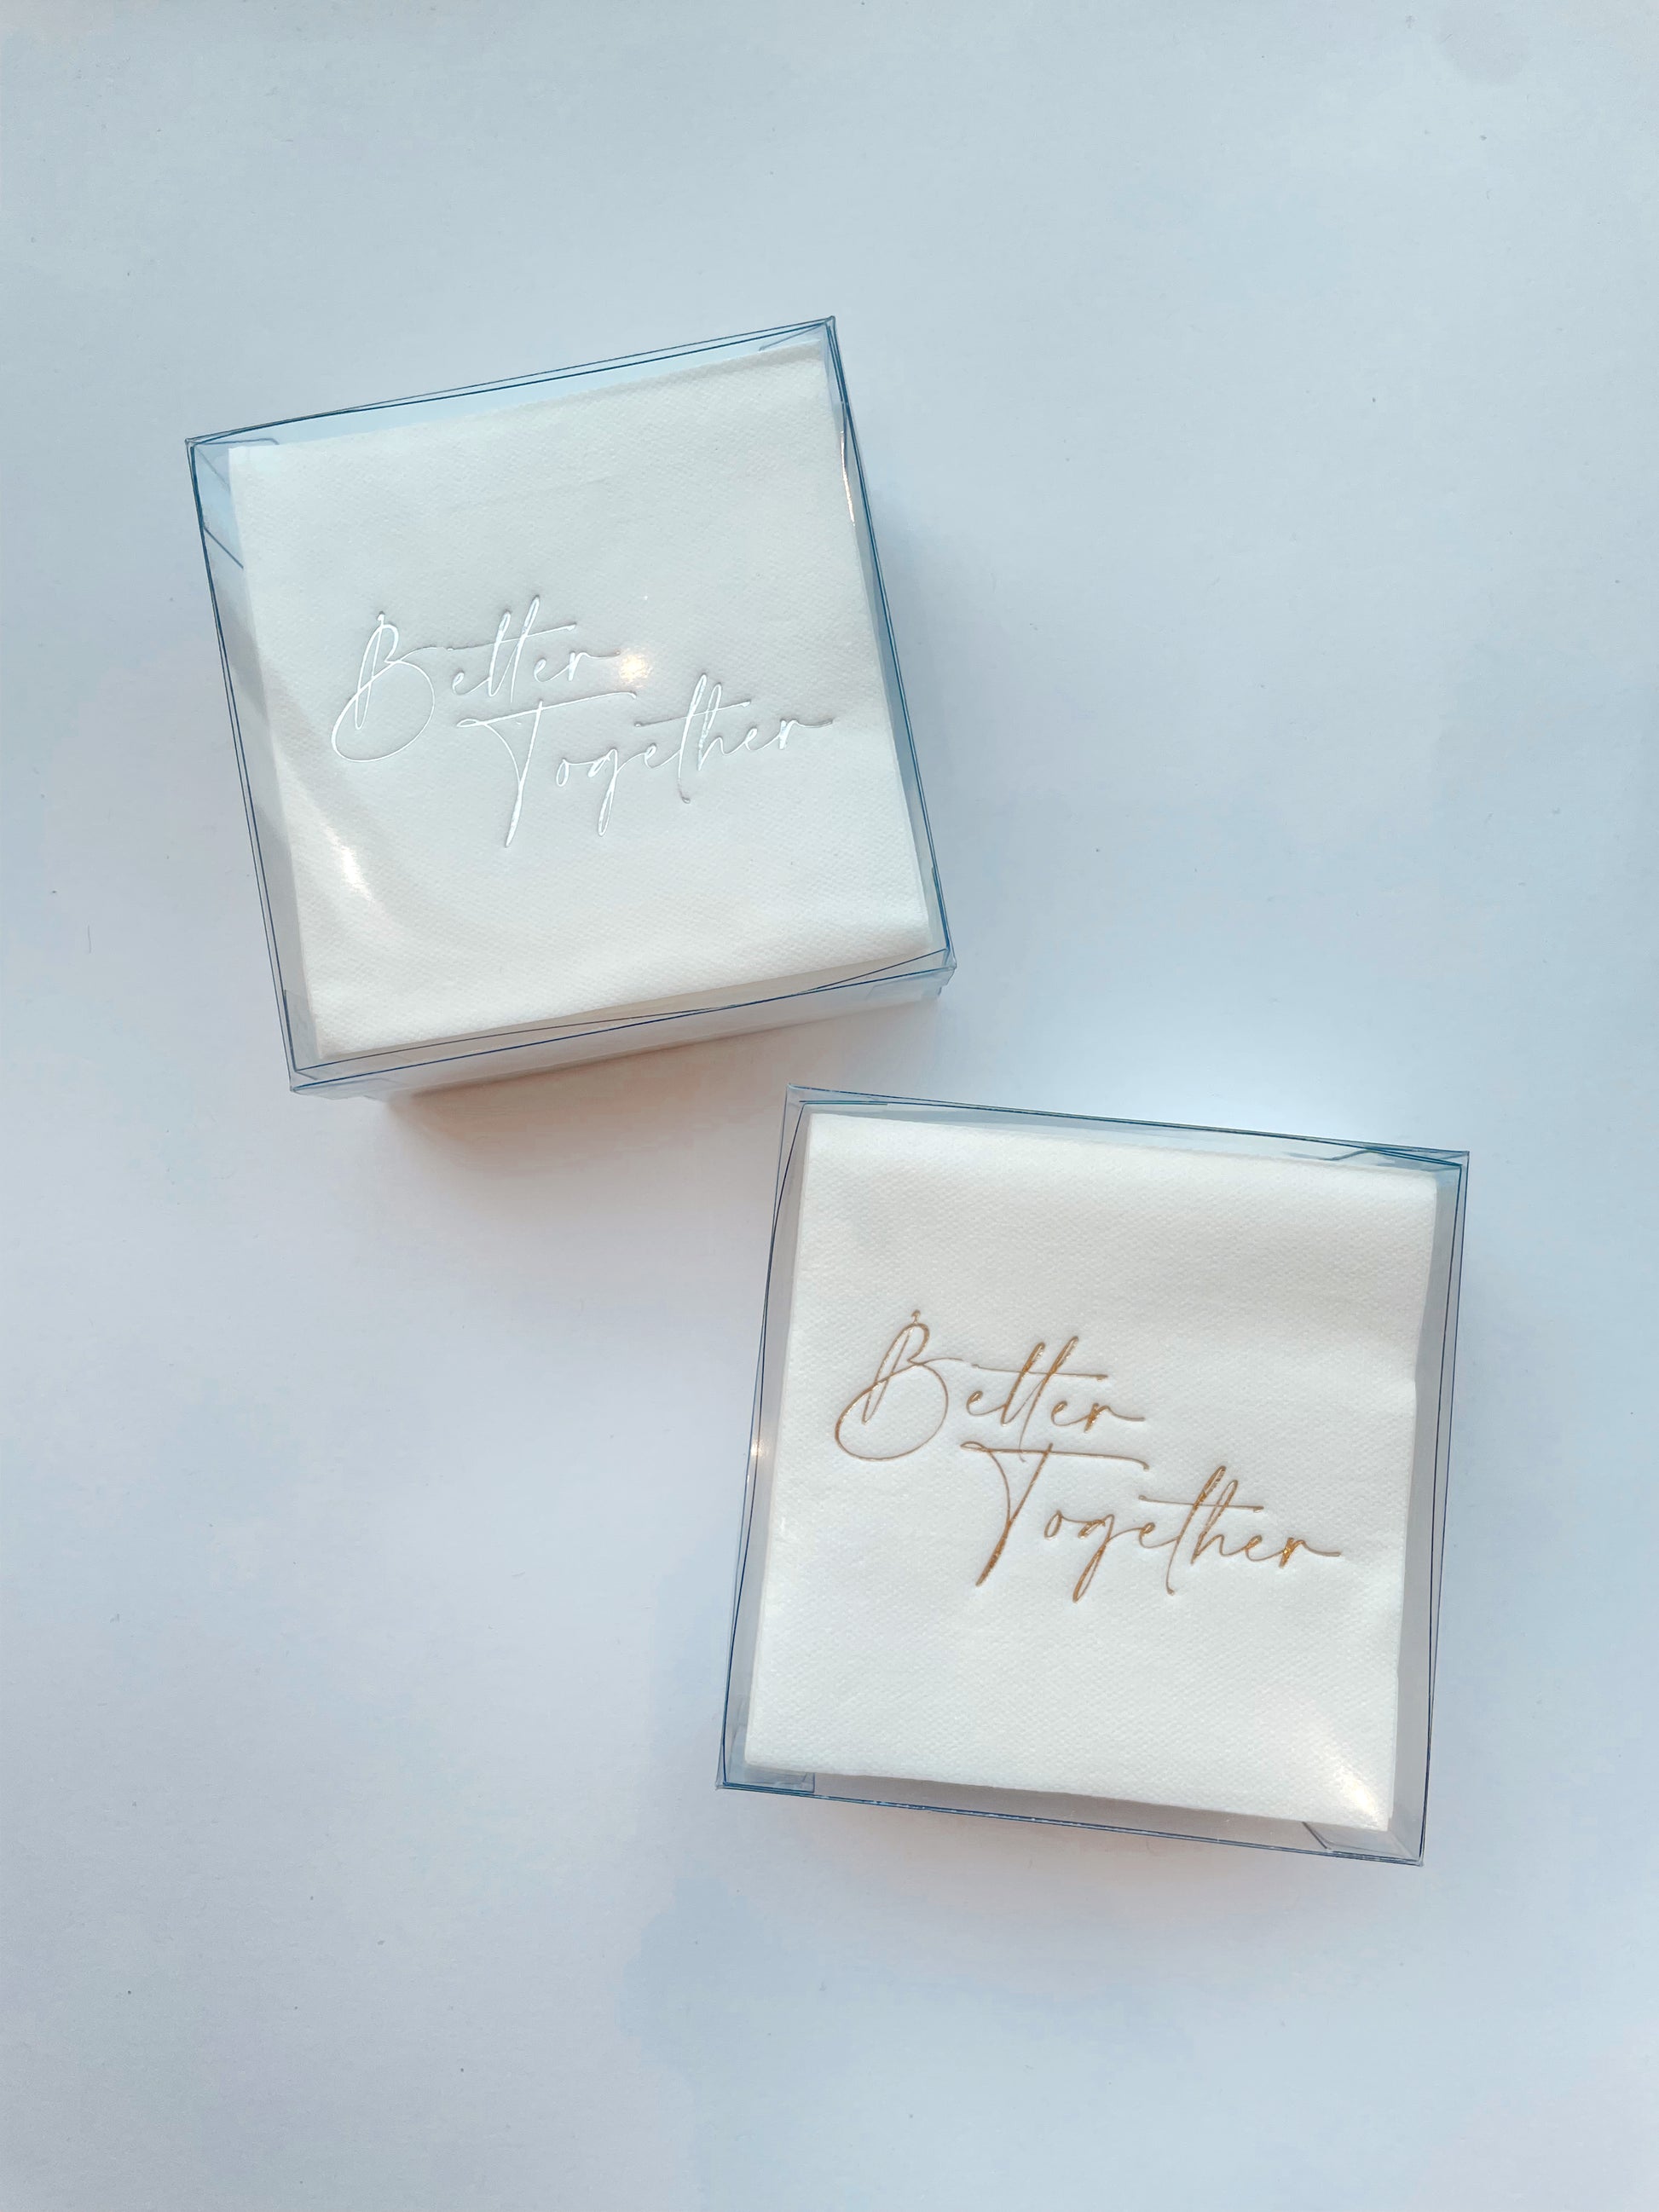 Servilletas cocteleras blancas con letras plateadas en foil "Better Together"